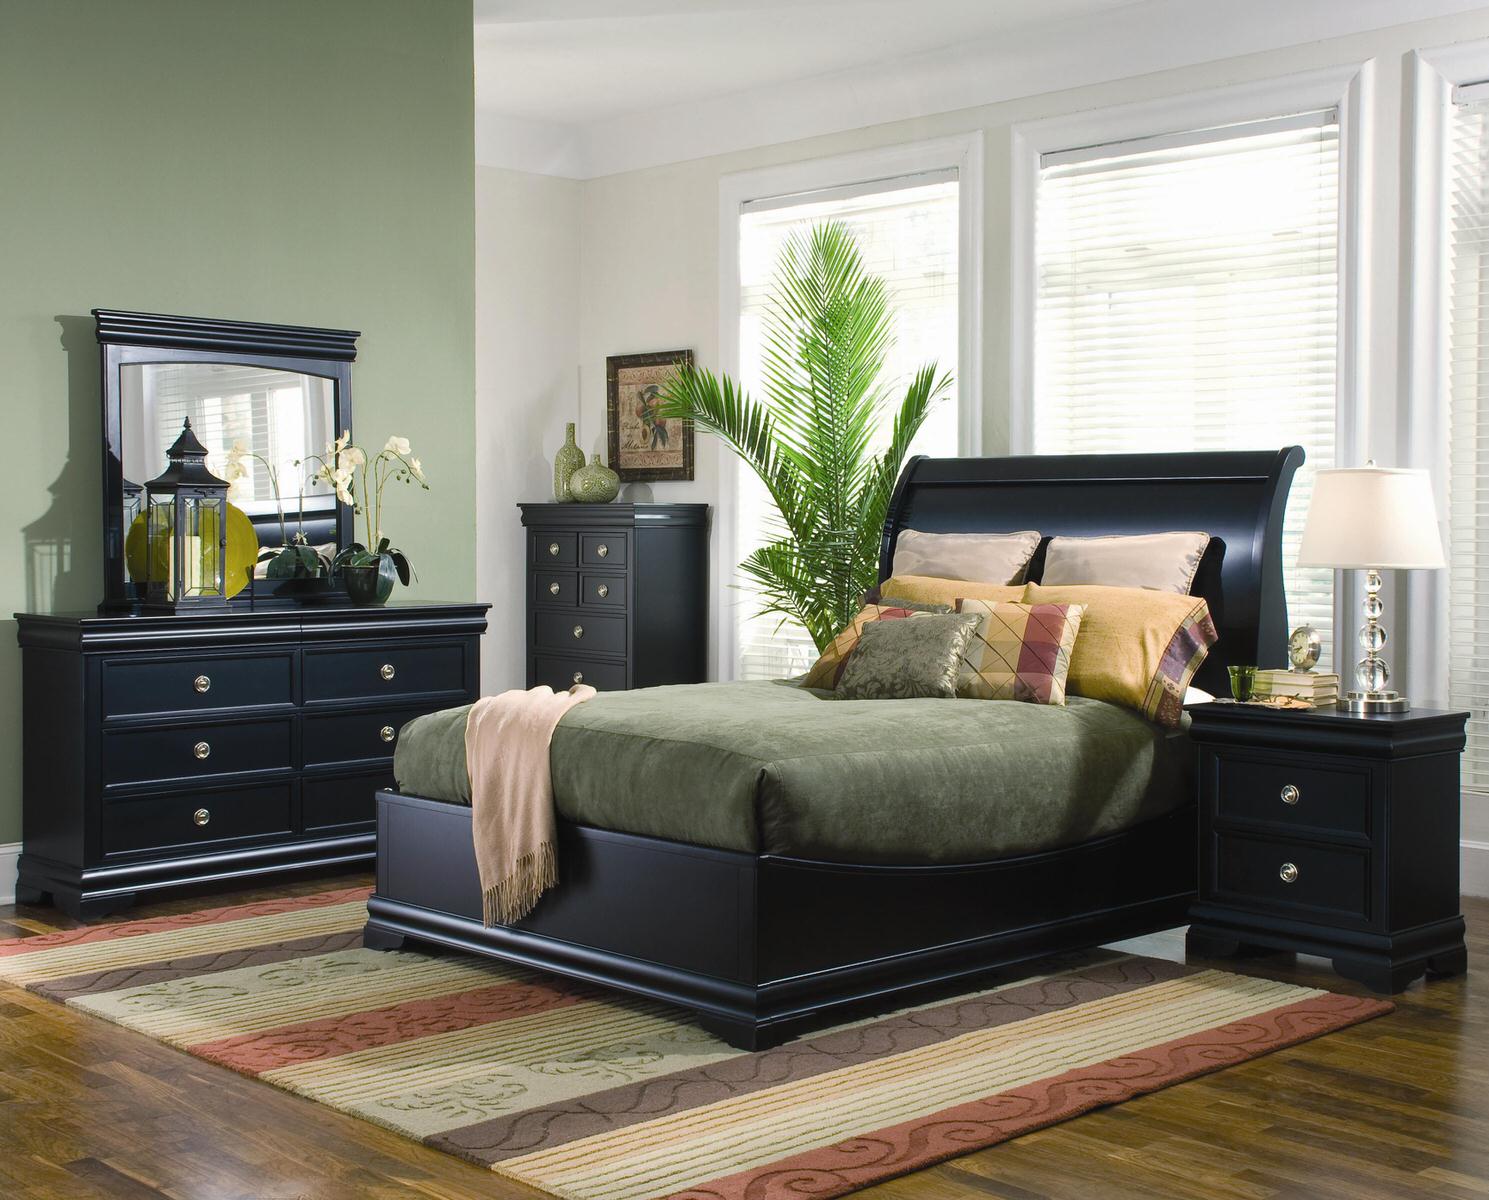 discontinued coaster bedroom furniture